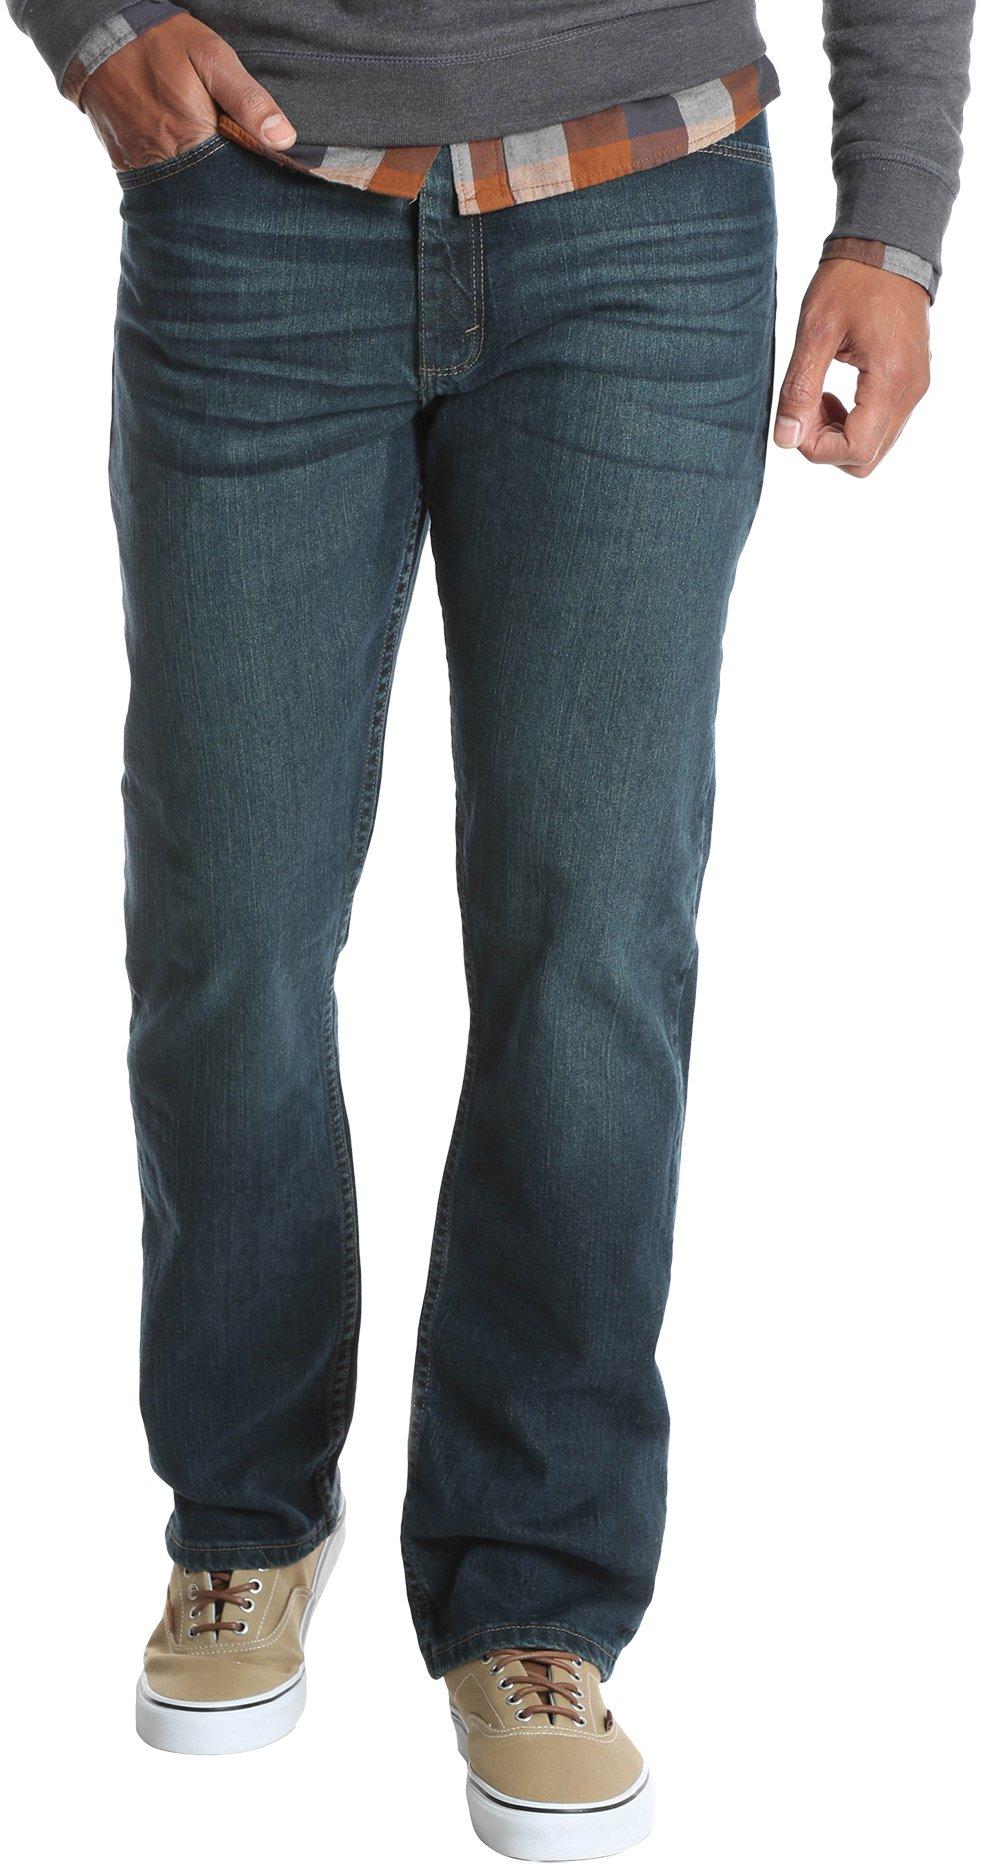 Wrangler Mens Comfort Flex Denim Regular Fit Jeans - image 1 of 2